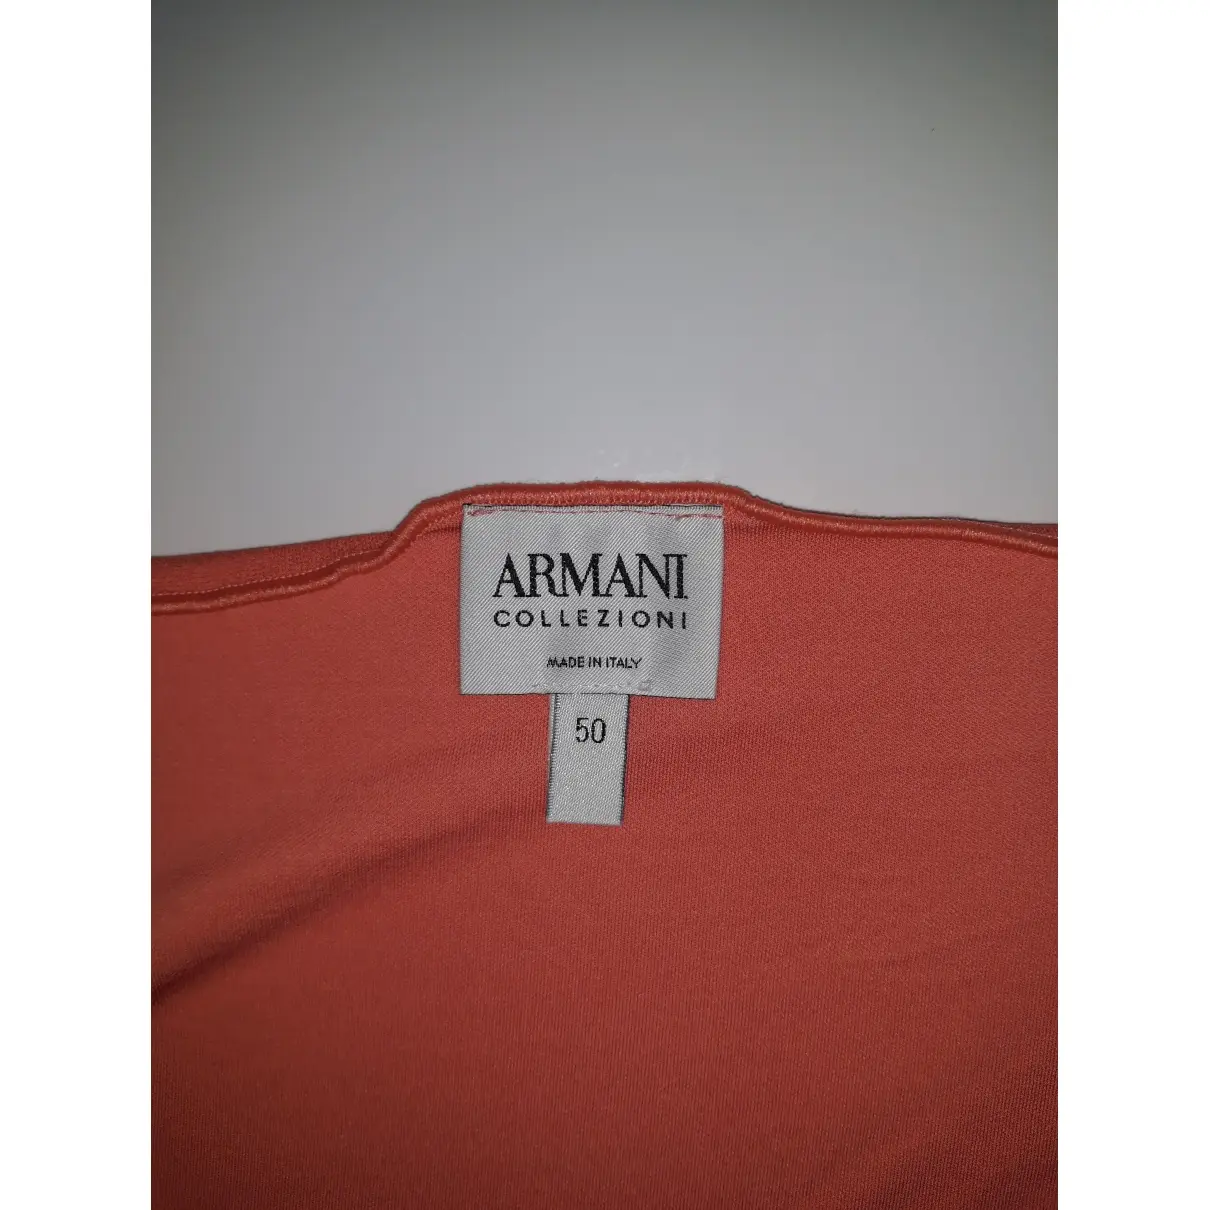 Buy Armani Collezioni Orange Viscose Top online - Vintage